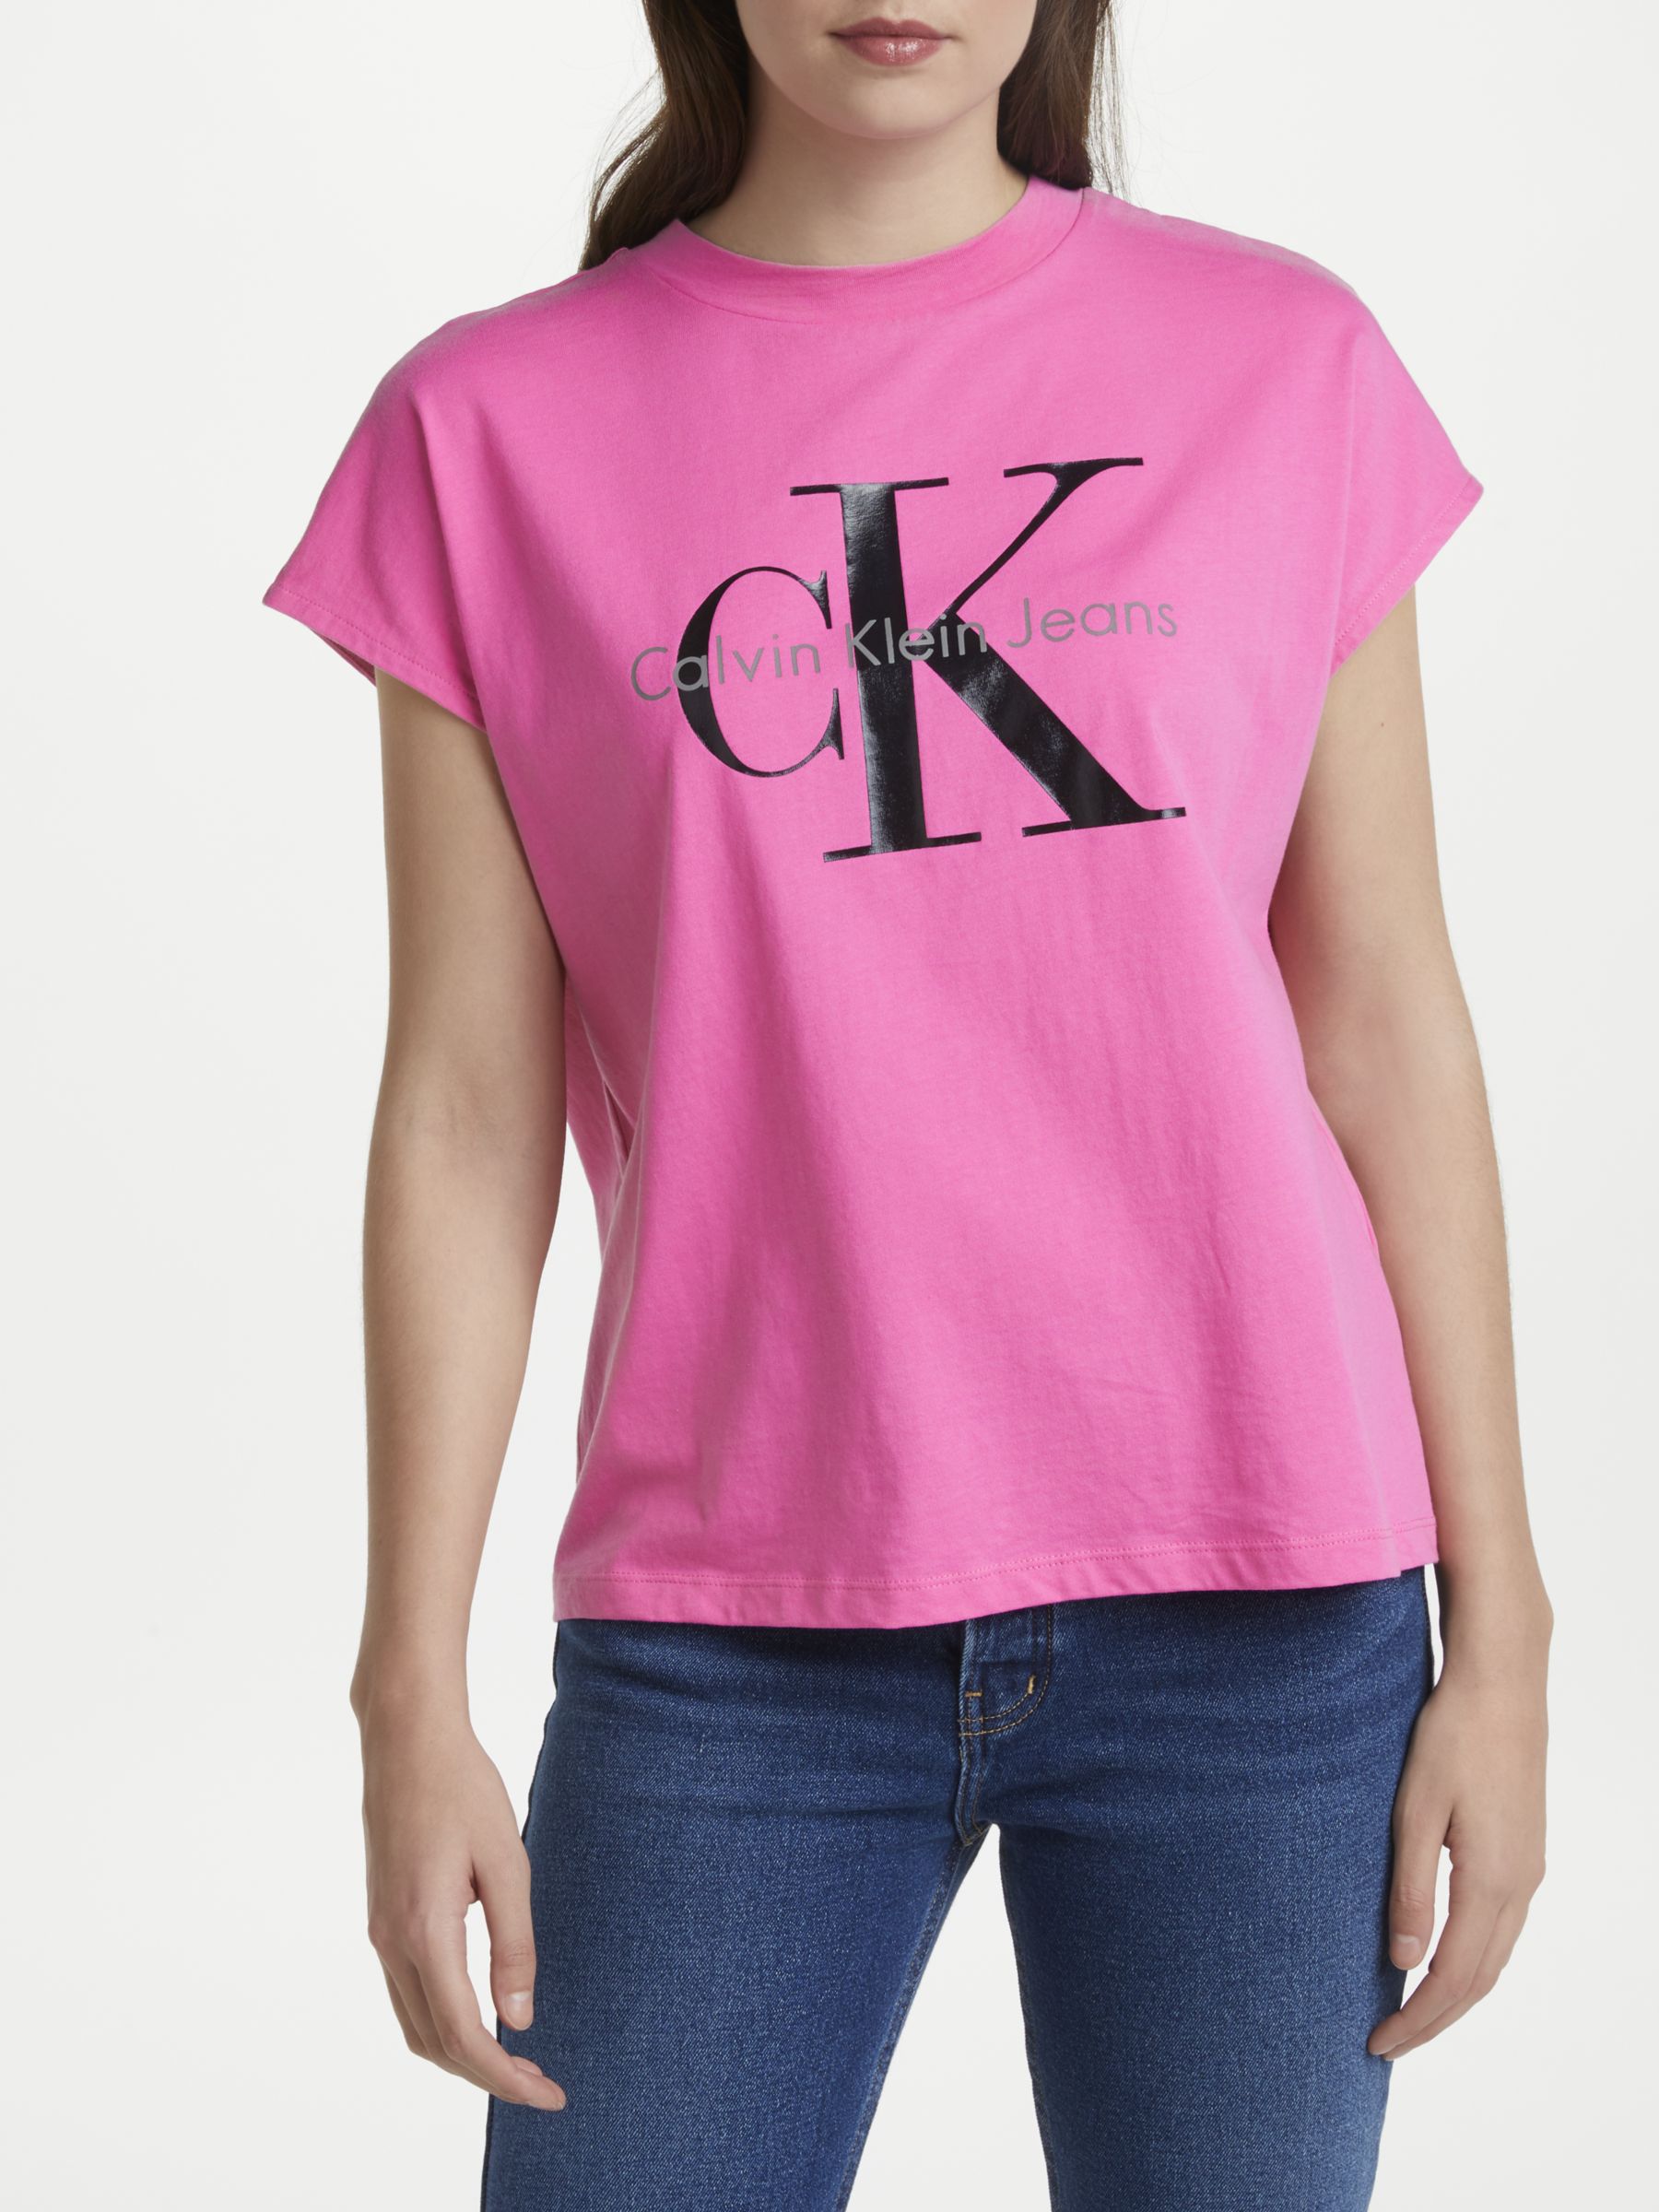 pink calvin klein shirt